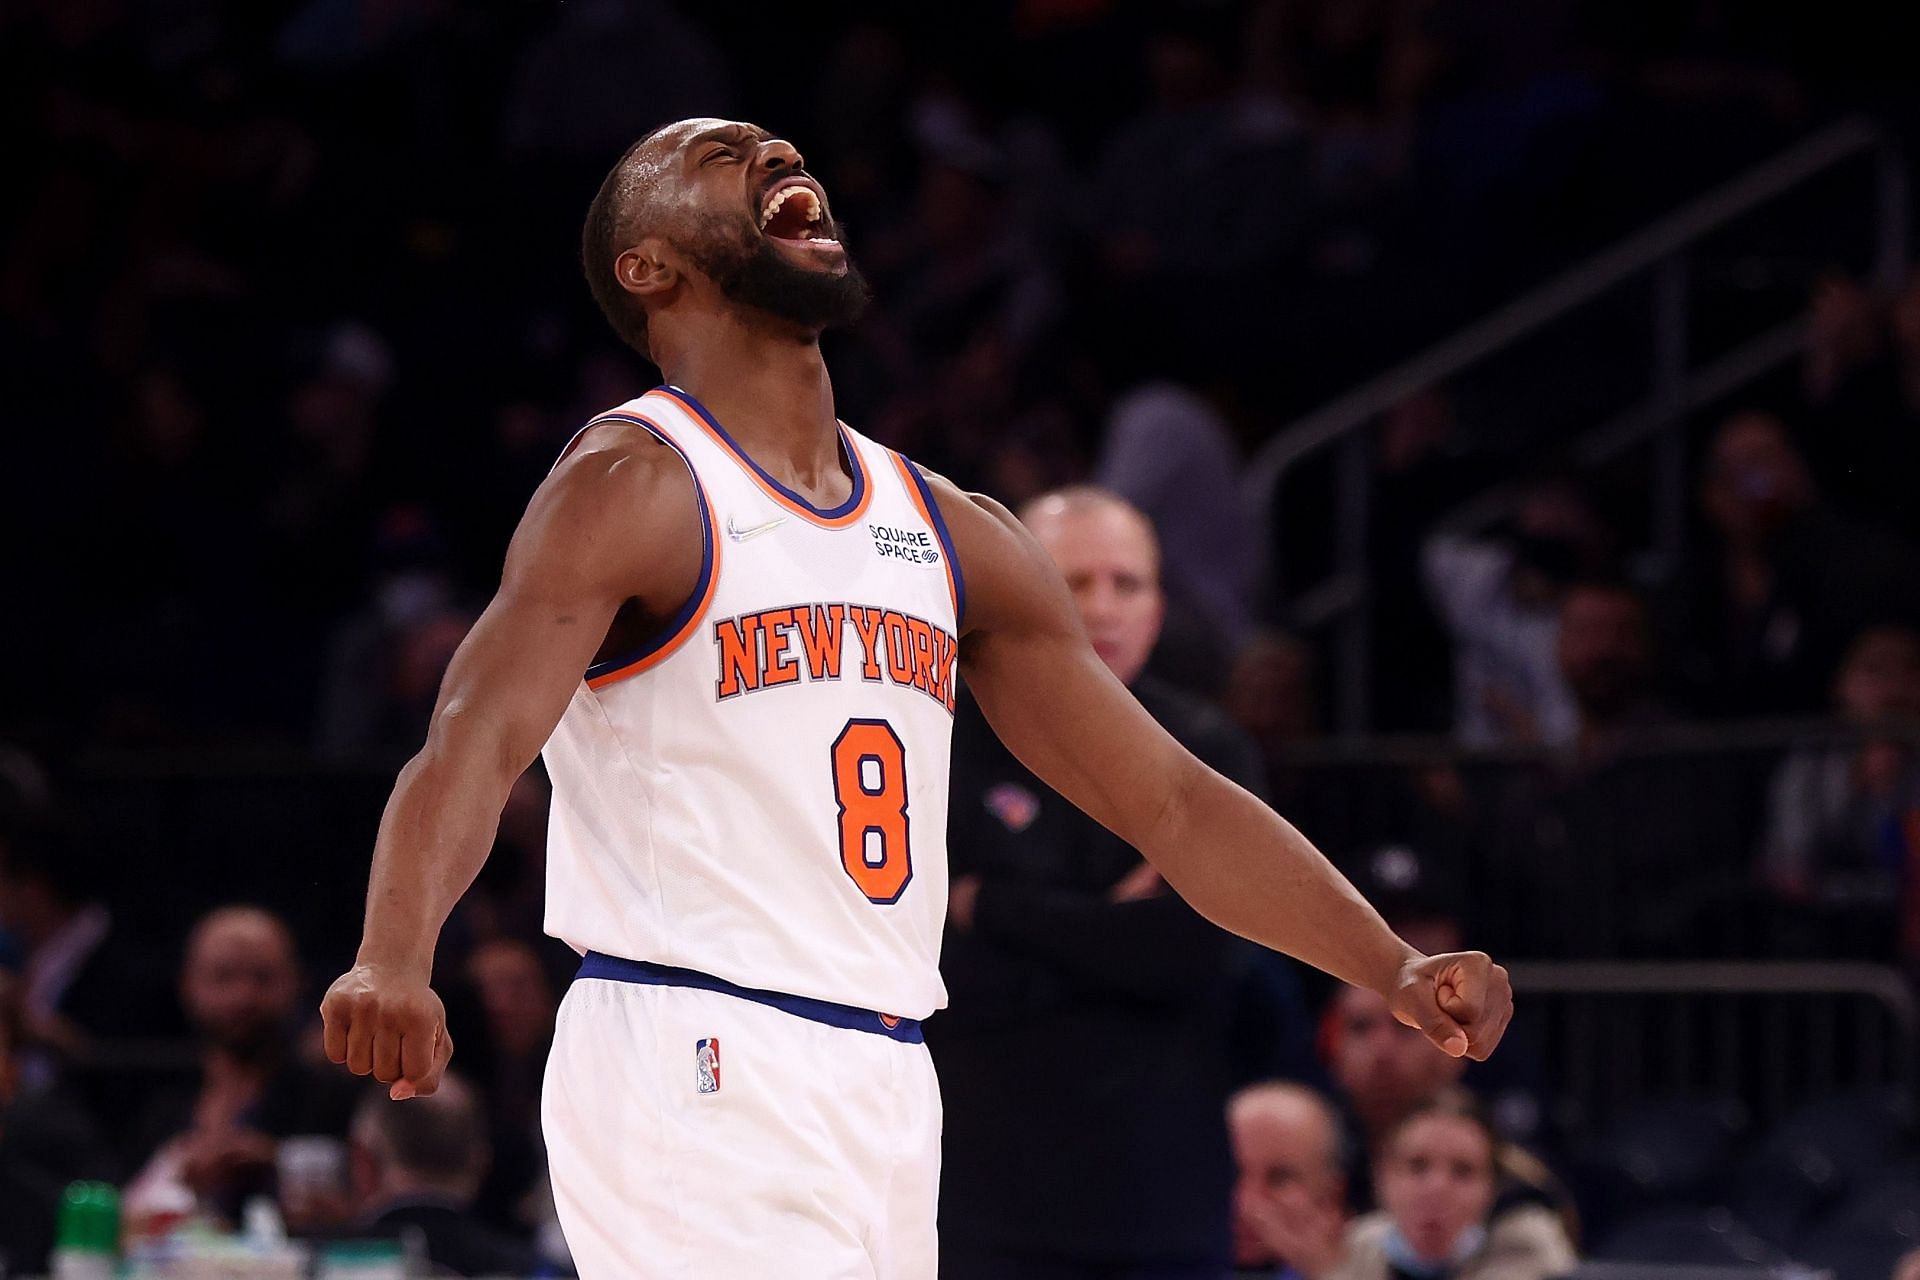 Kemba Walker of the New York Knicks